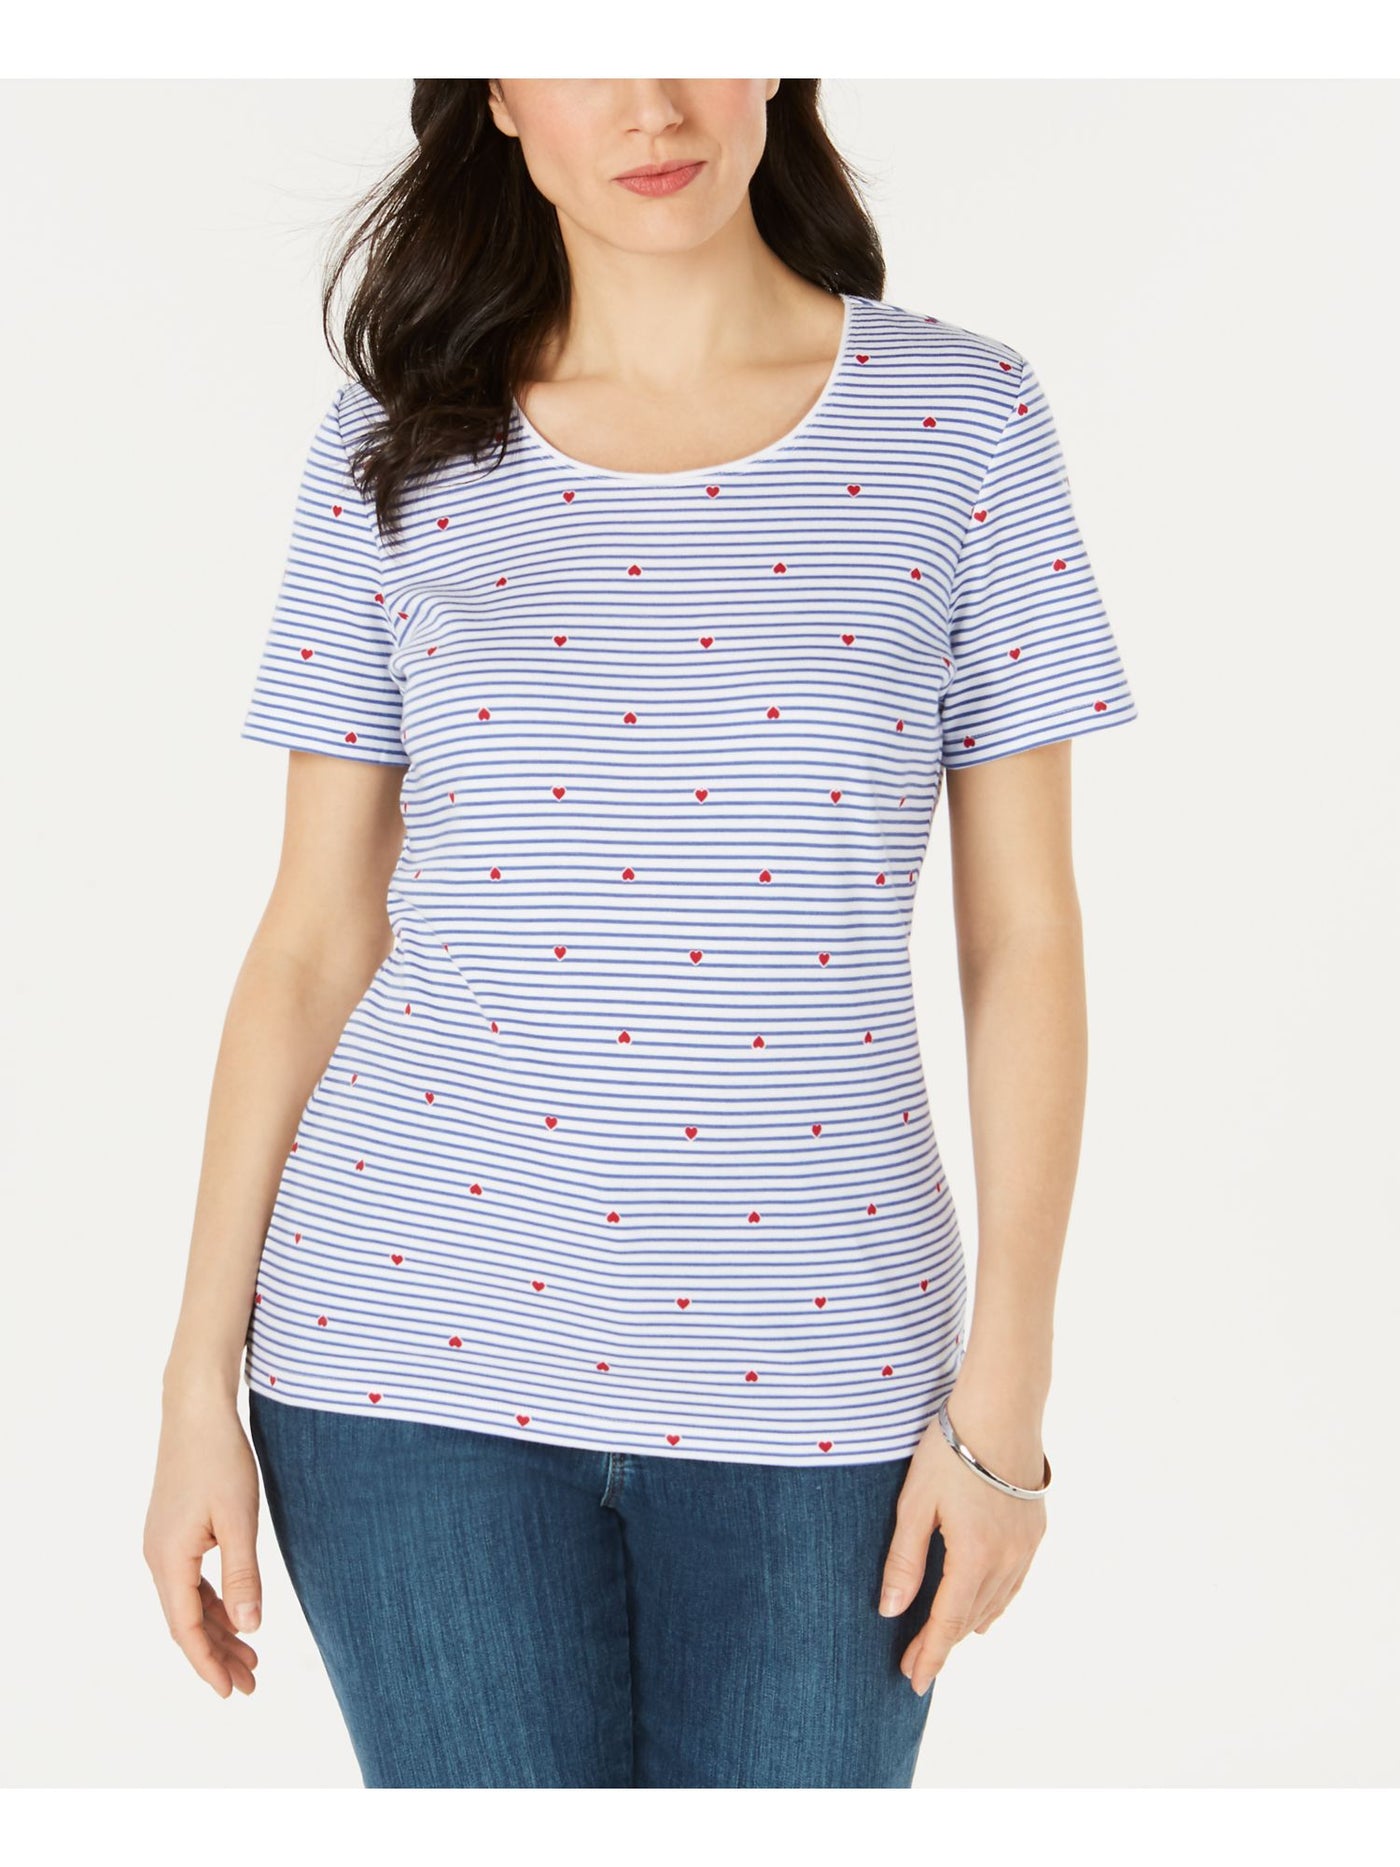 KAREN SCOTT Womens Blue Printed Short Sleeve Scoop Neck T-Shirt S